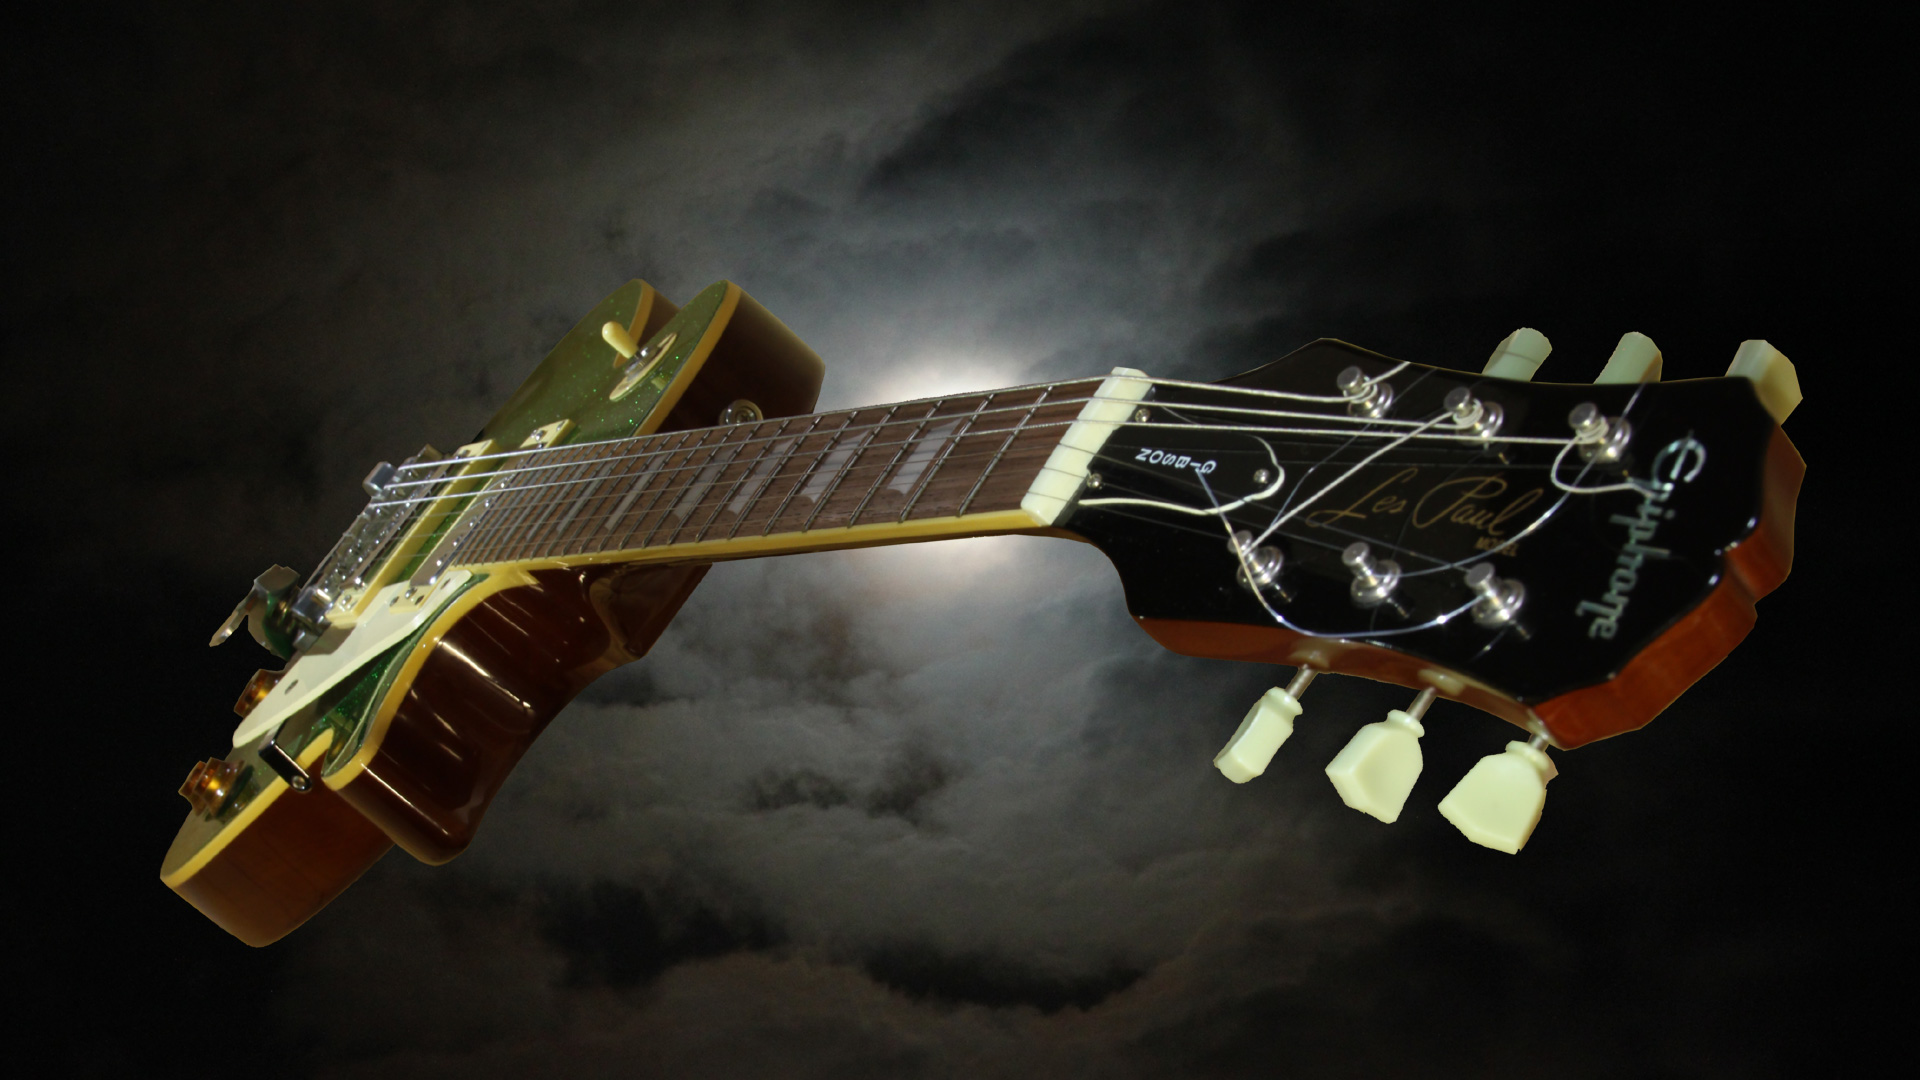 Epiphone Gibson Les Paul guitar